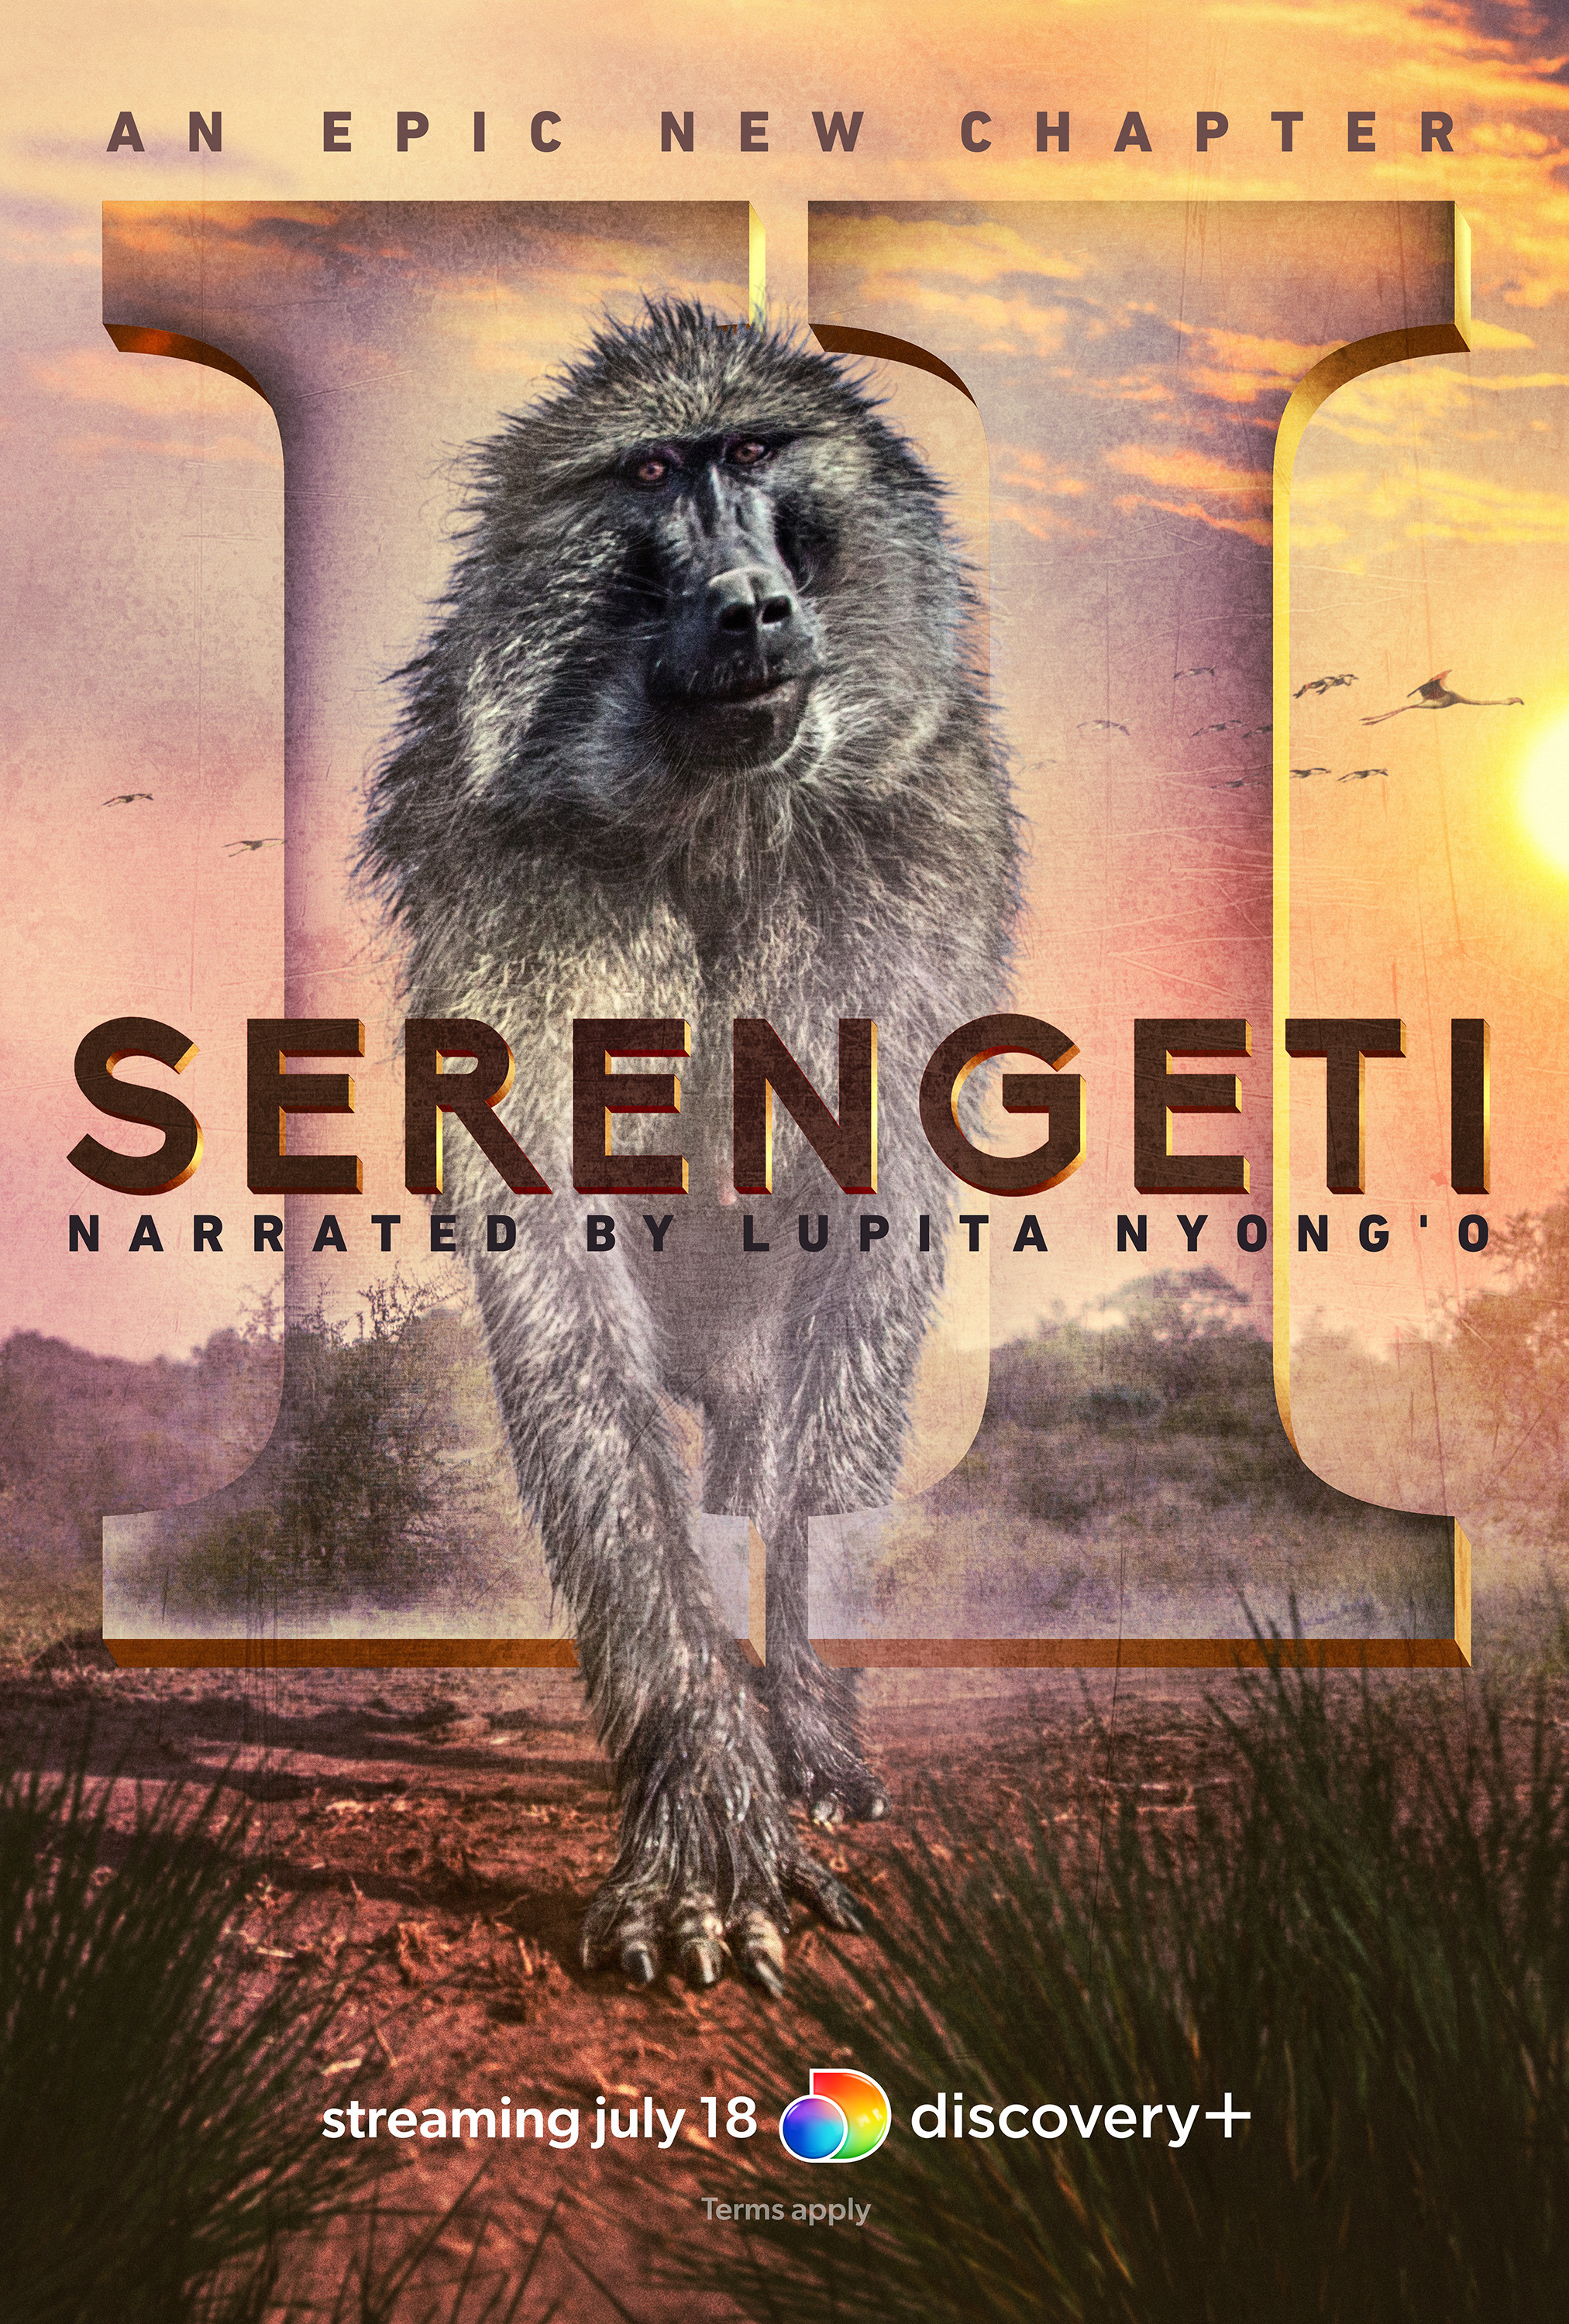 Mega Sized TV Poster Image for Serengeti (#5 of 8)